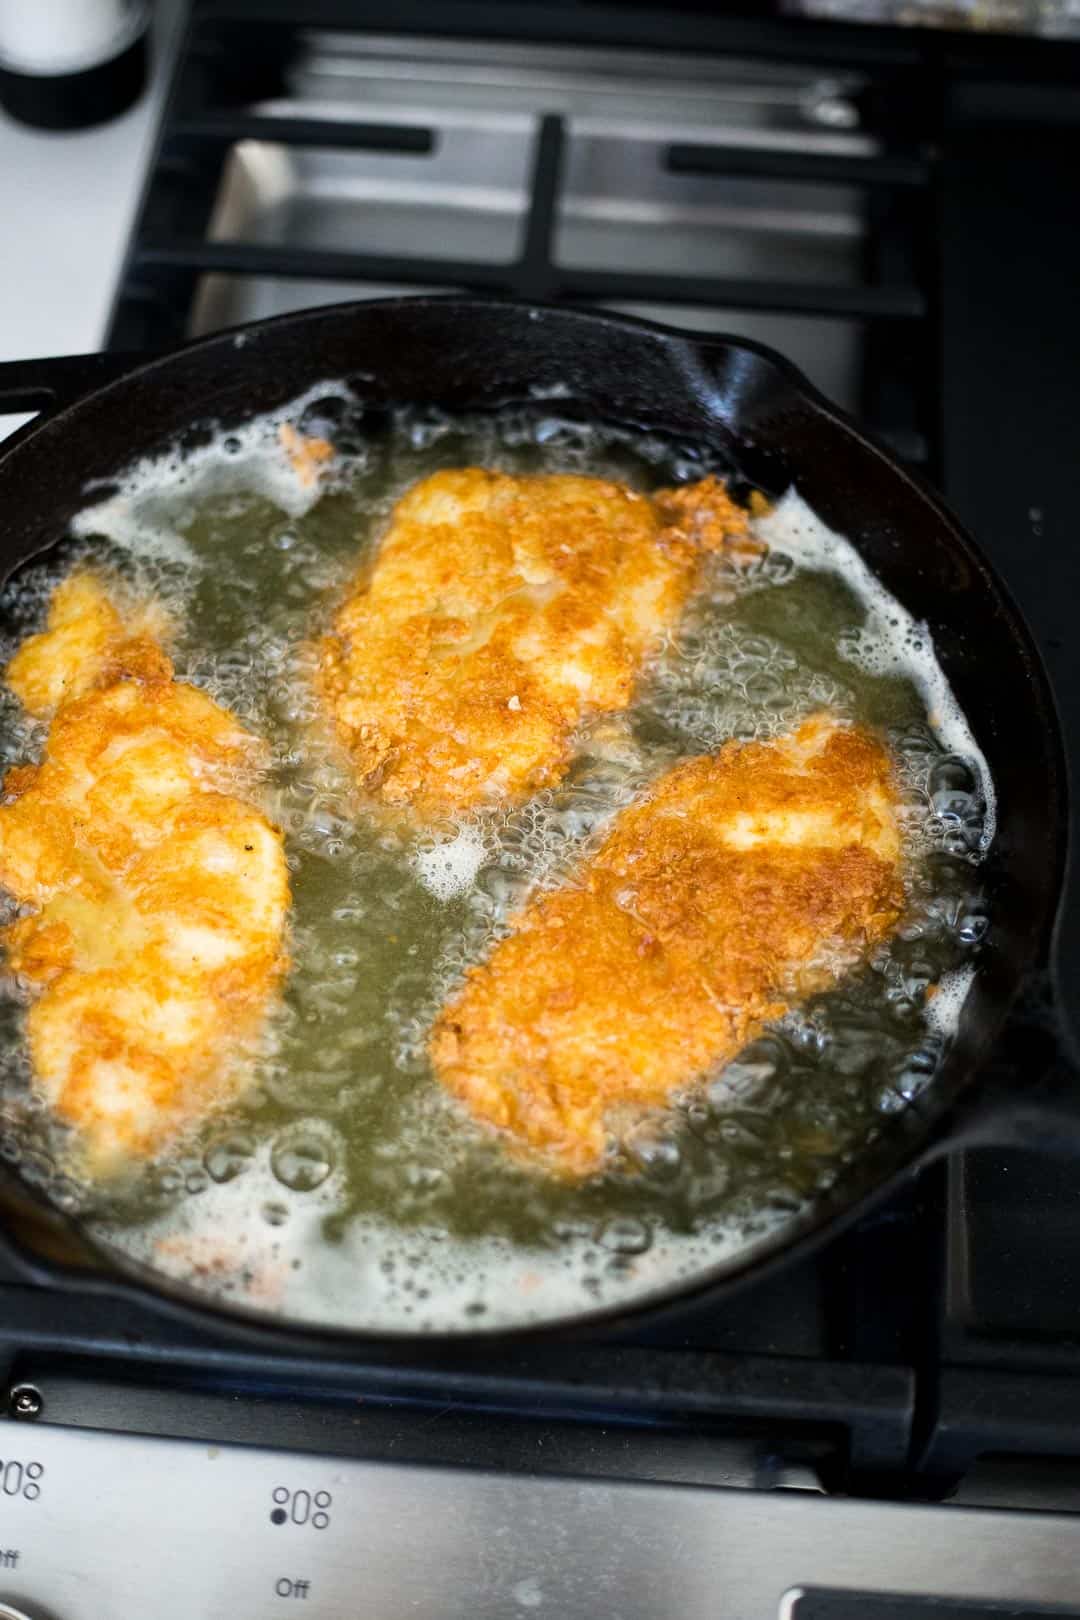 Process shot of breaded chicken frying in oil